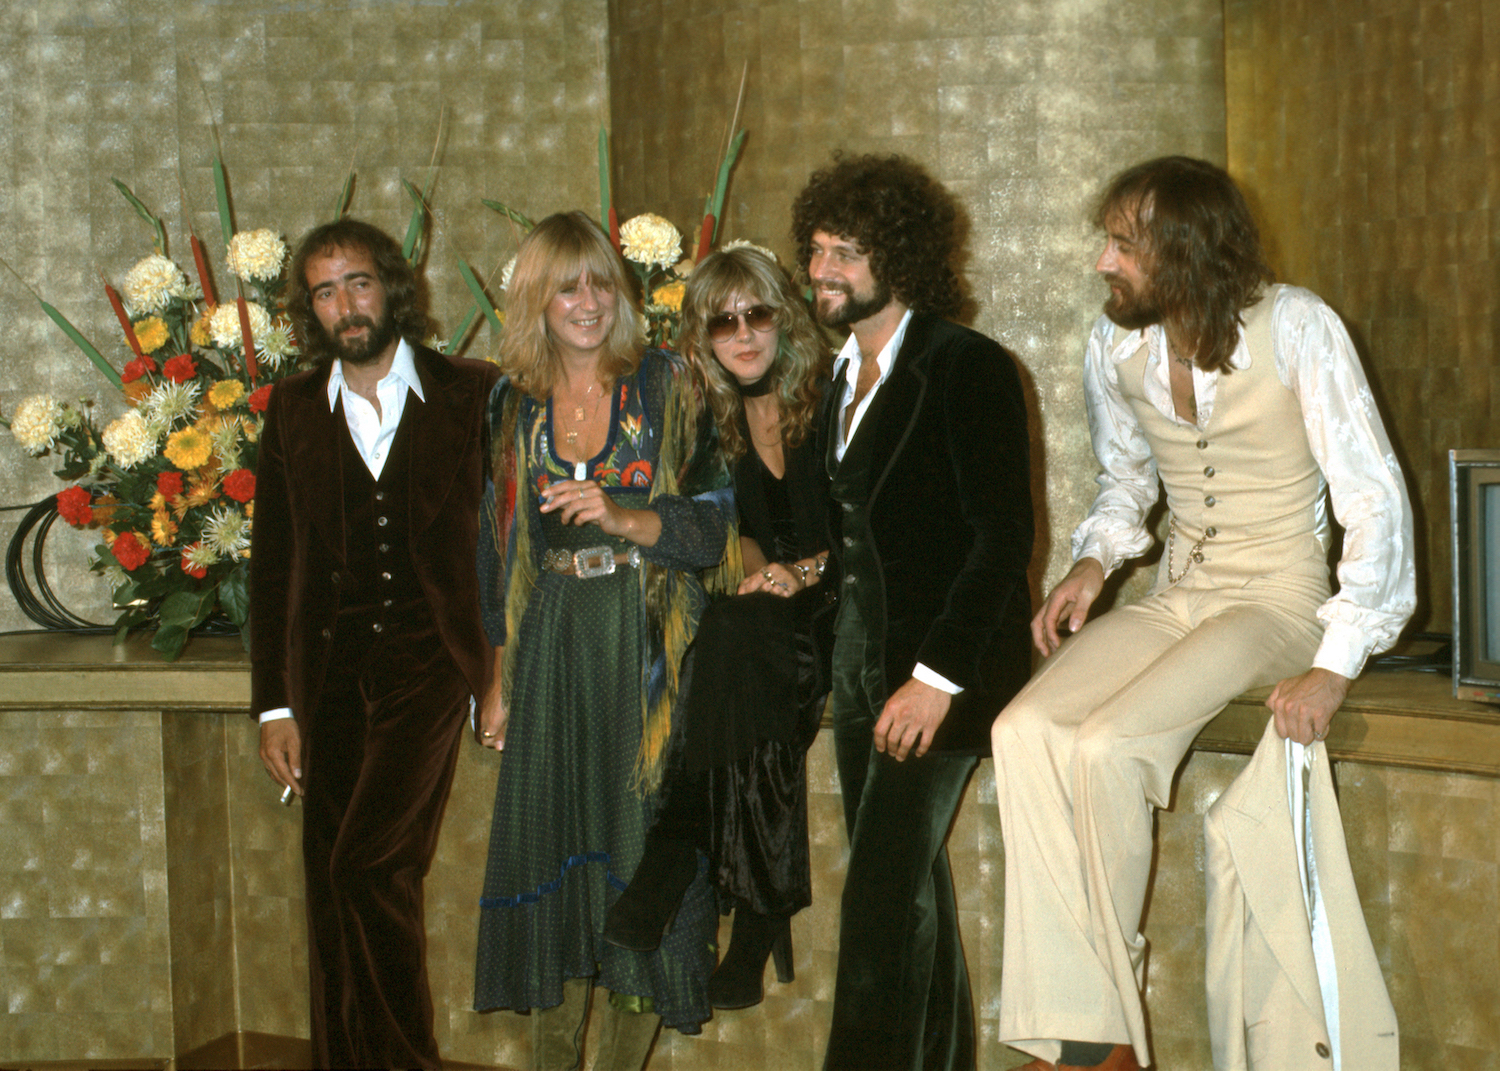 John McVie, Christine McVie, Stevie Nicks, Lindsey Buckingham, and Mick Fleetwood of the rock group Fleetwood Mac